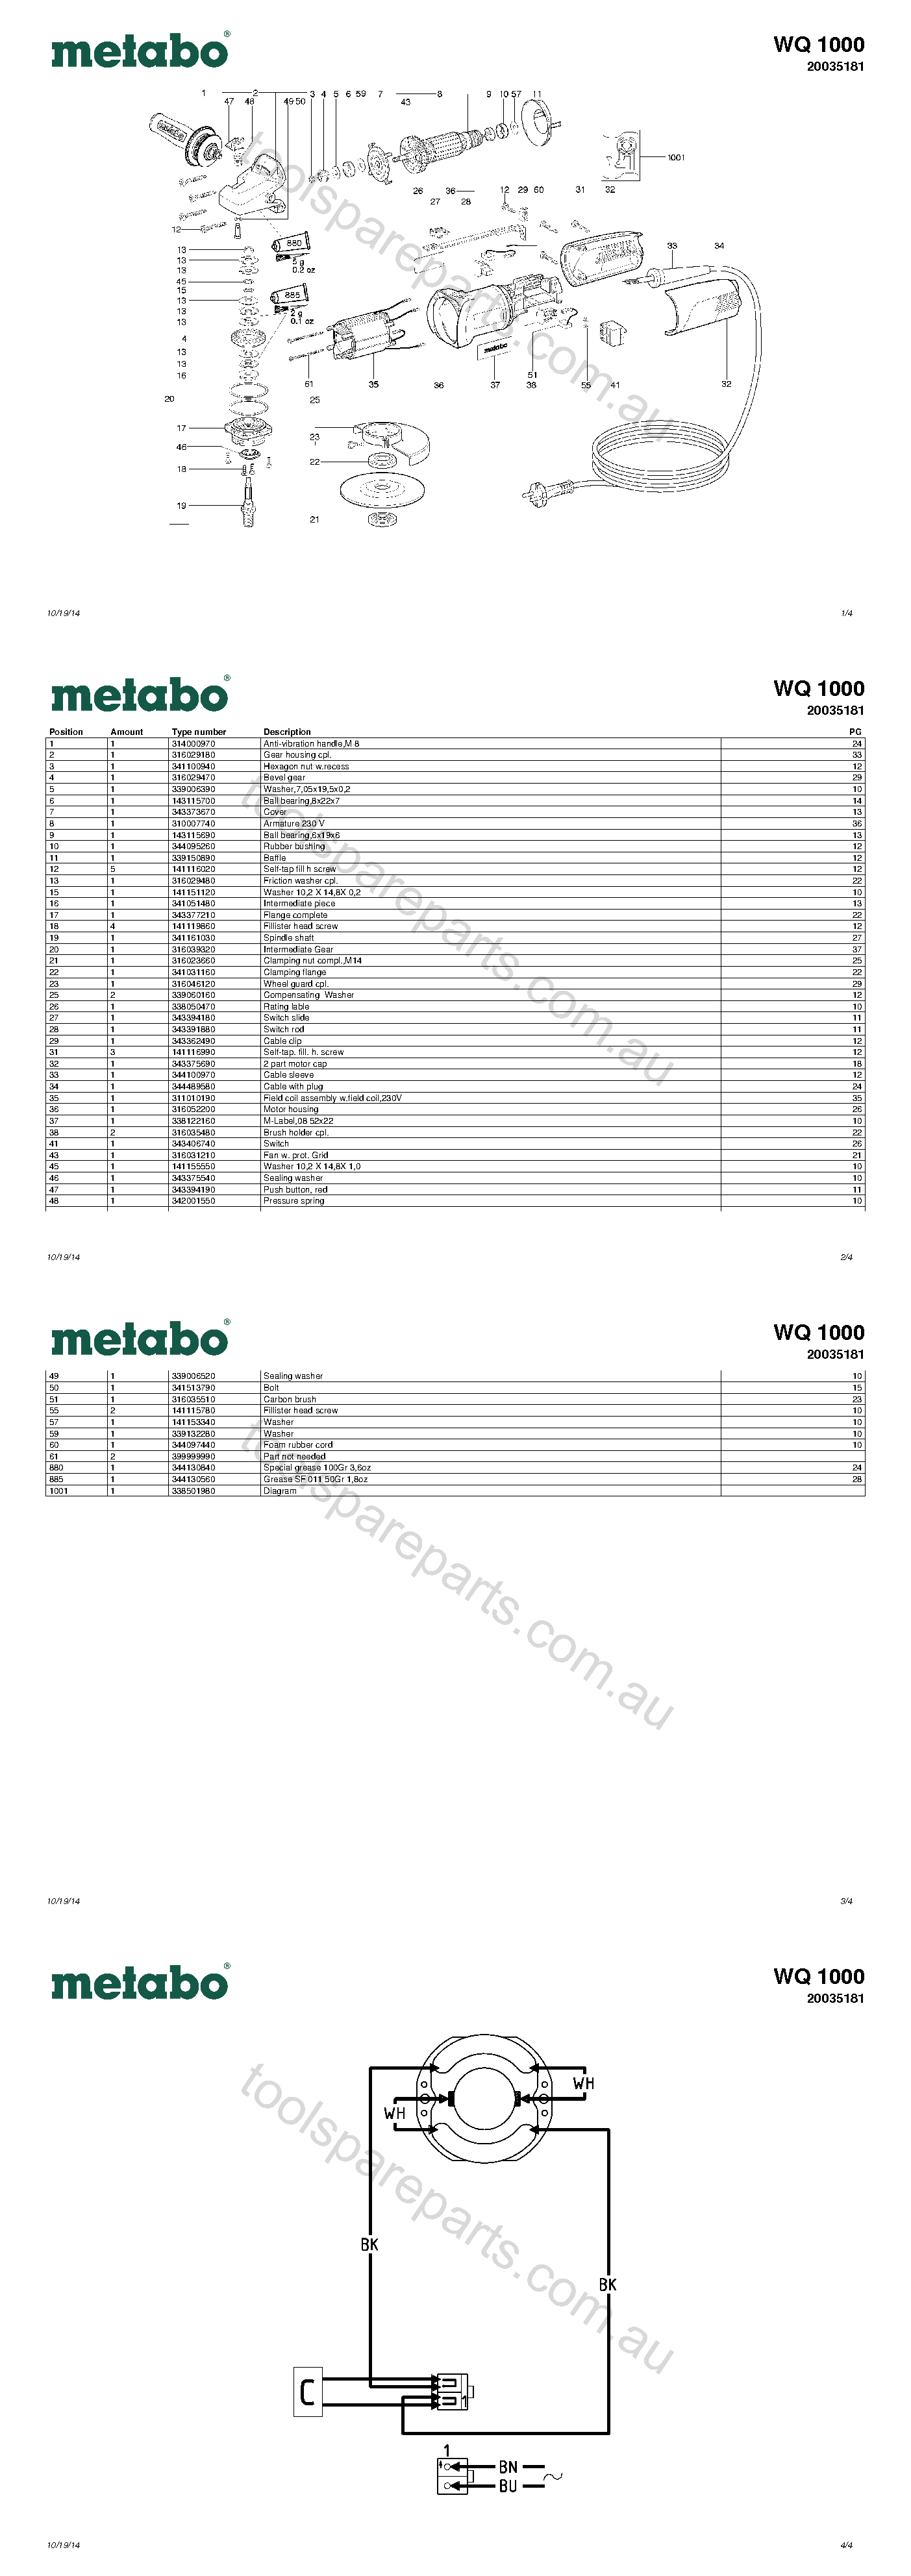 Metabo WQ 1000 20035181  Diagram 1